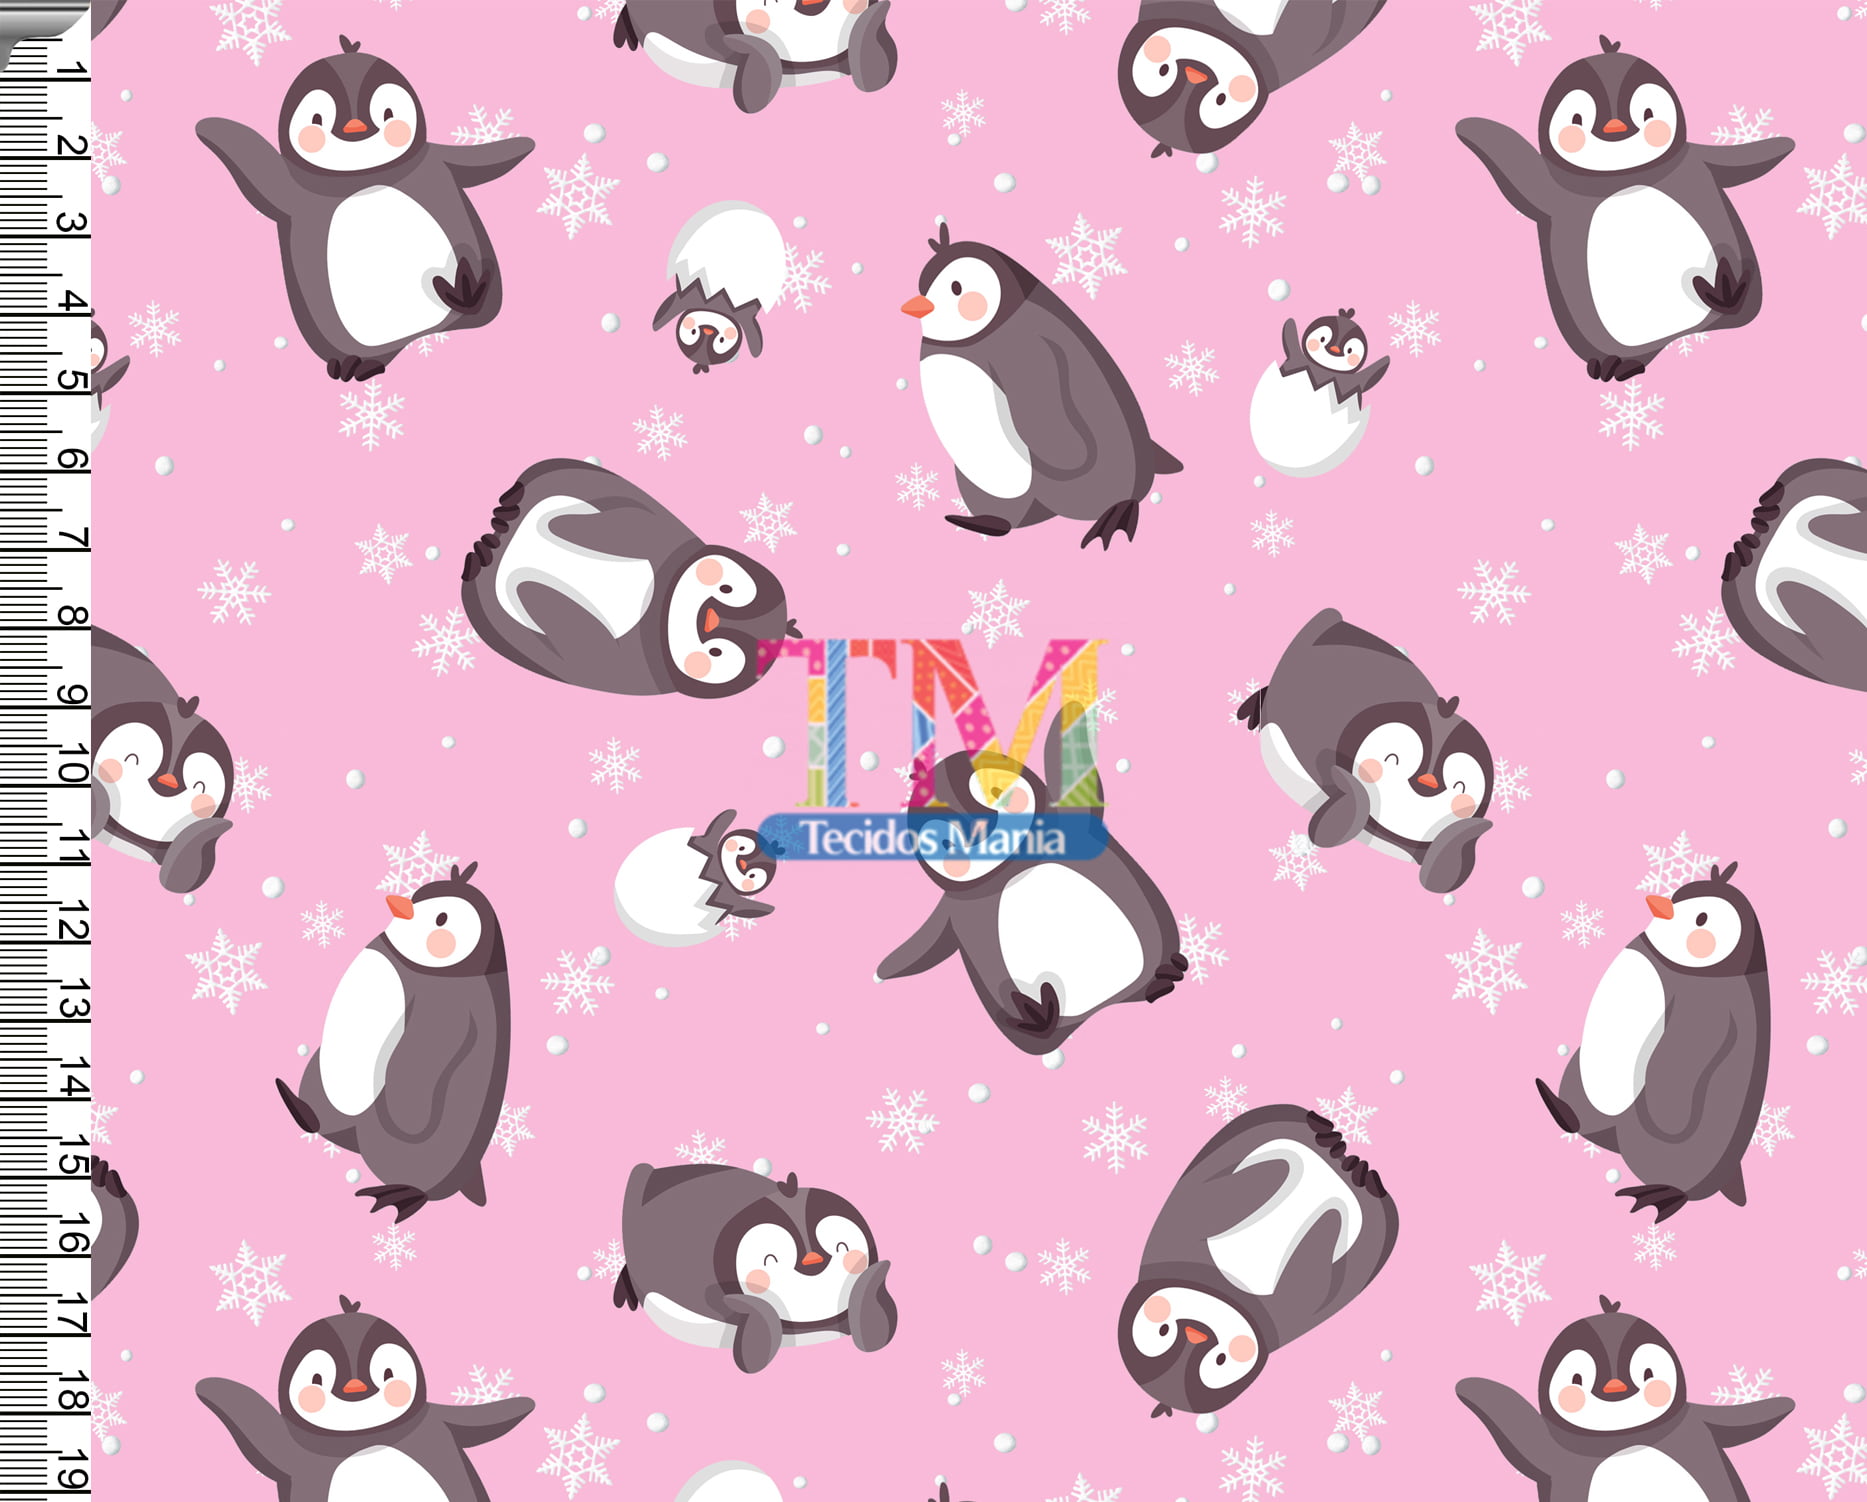 Sintético doll estampado - Pinguim - flocos de neve - fundo rosa 